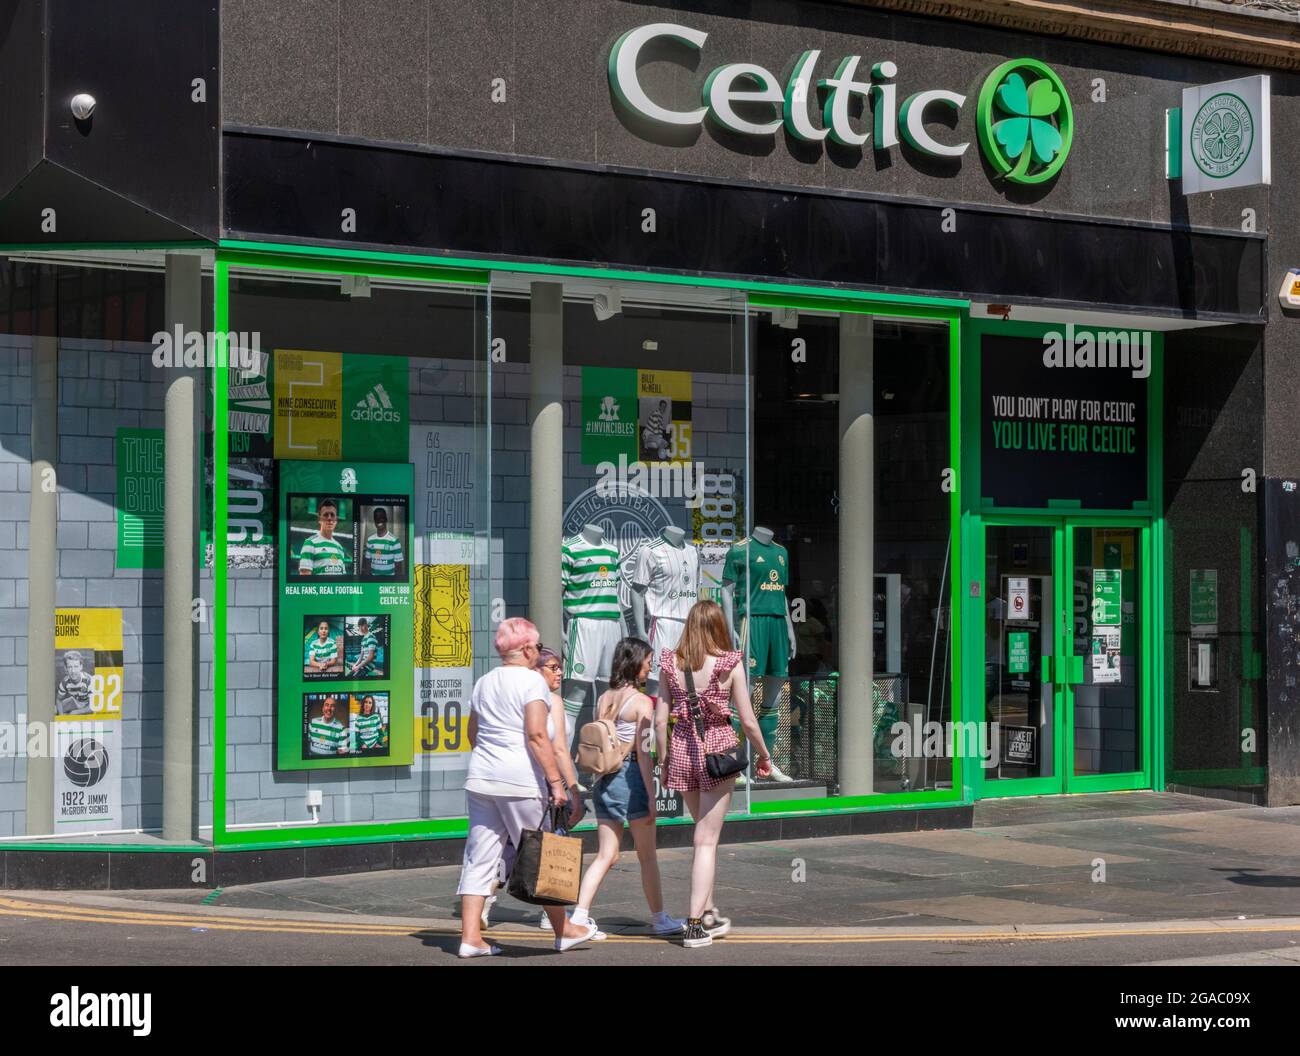 celtic supporters shop, scottish football, scotland football teams, celtic  rangers, fans shop for celtic football club, celtic football supporters  Stock Photo - Alamy